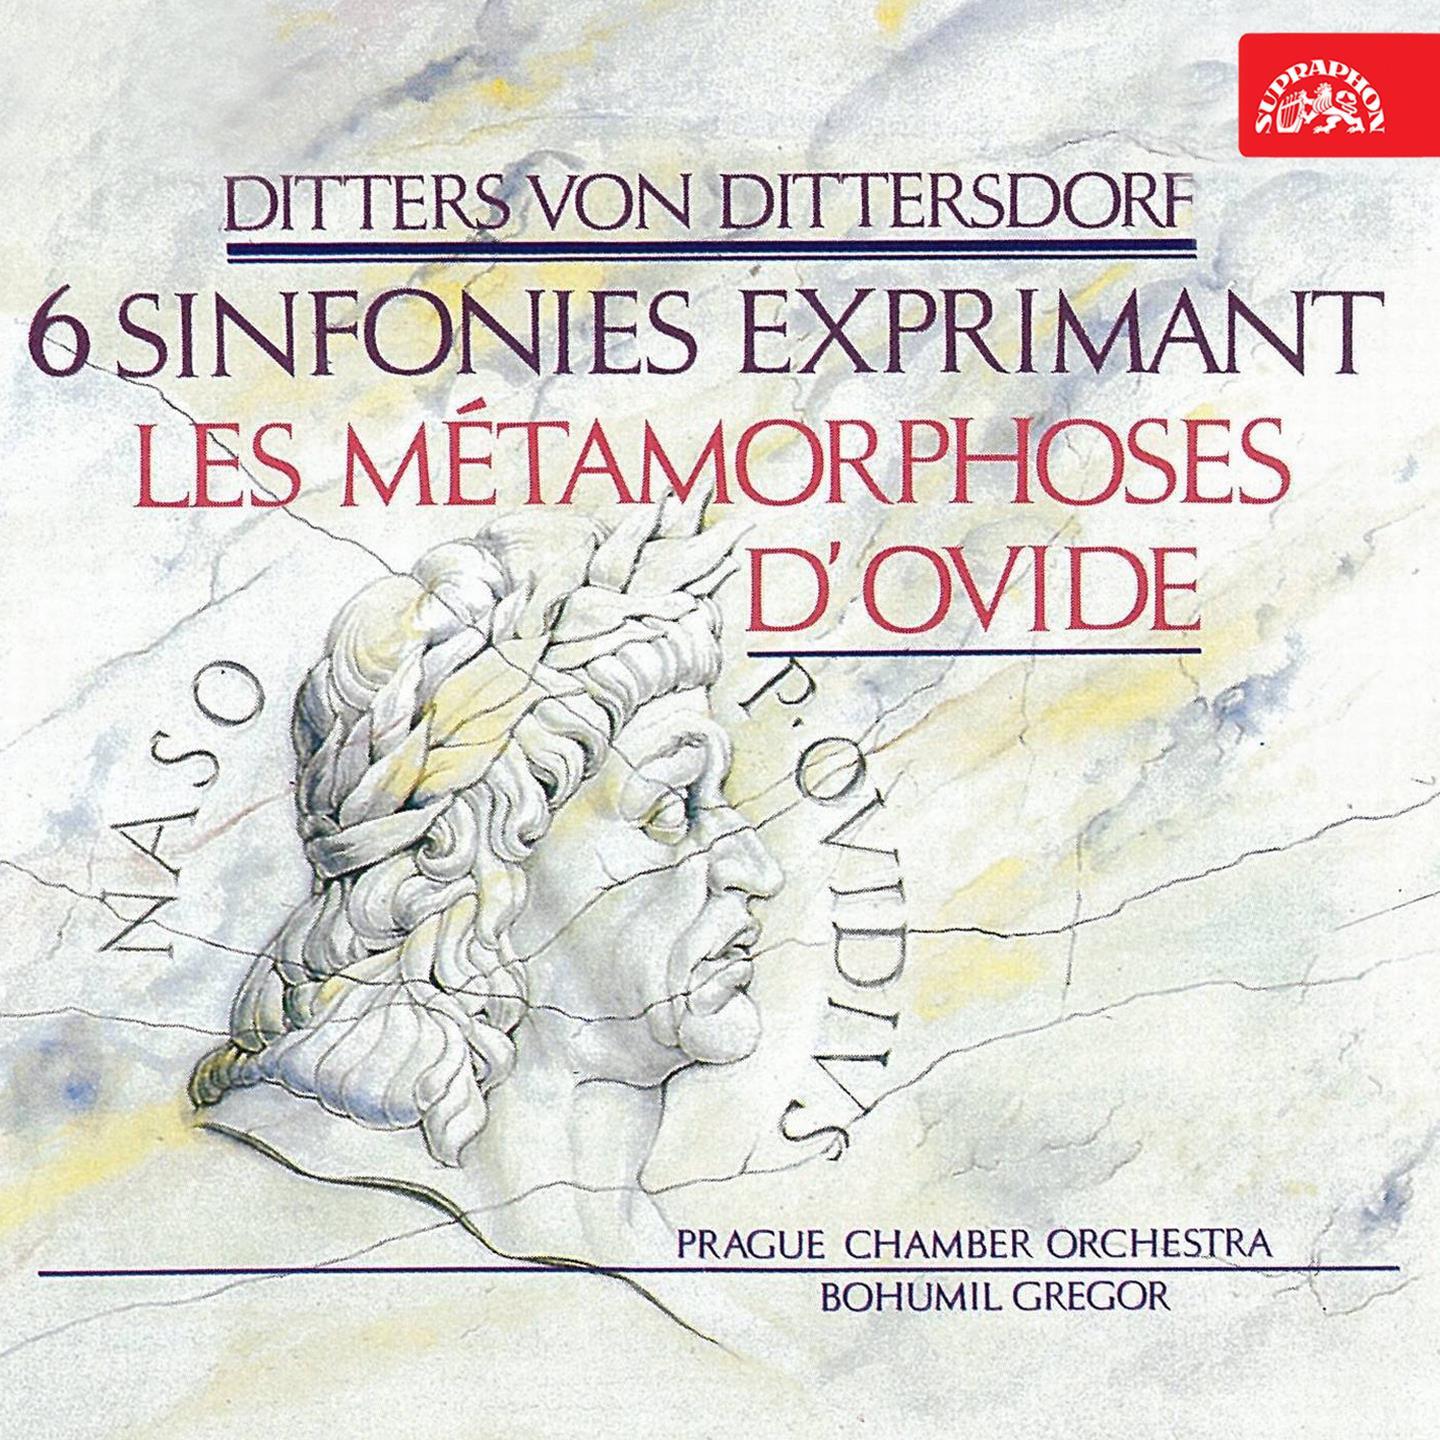 Symphonies After Ovid's Metamorphoses, No. 1 in C Major, Kr. 73 "Die vier Weltalter": II. Allegro e vivace